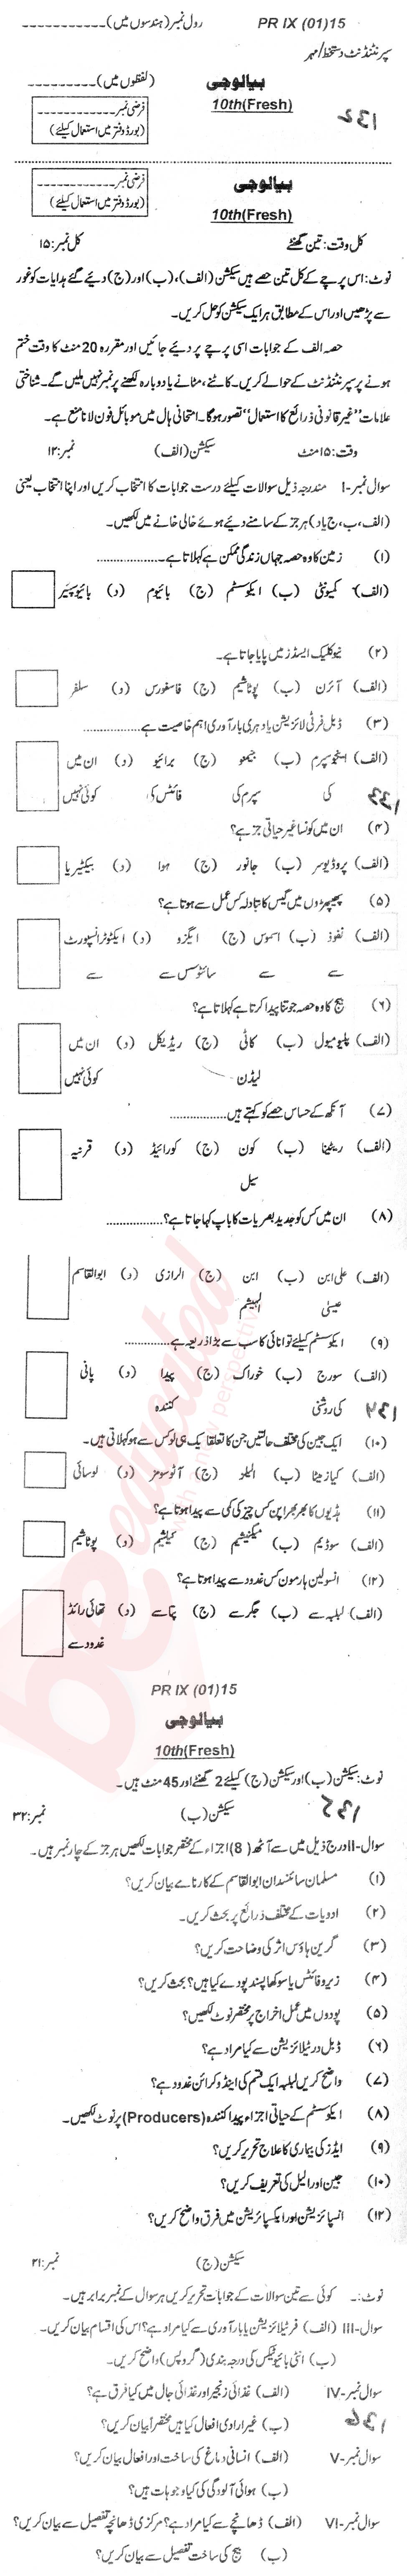 Biology 10th Urdu Medium Past Paper Group 1 BISE Bannu 2015